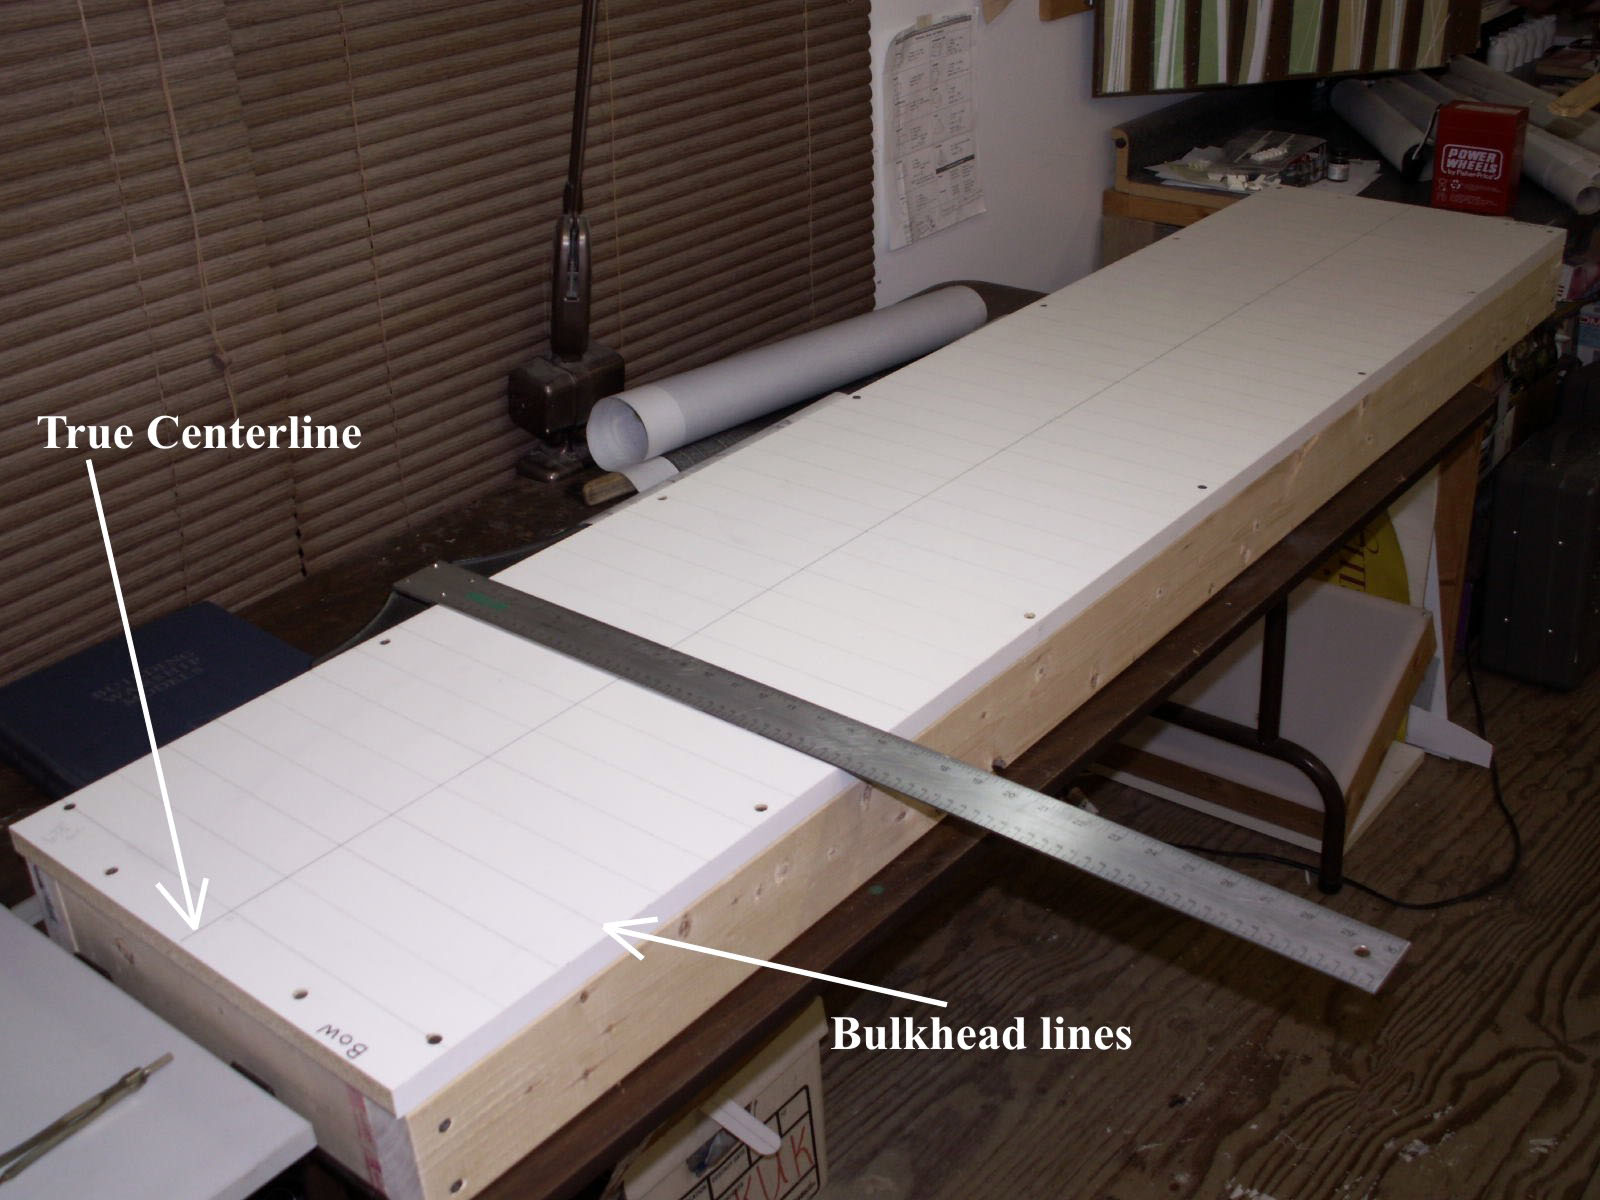 model aircraft building board